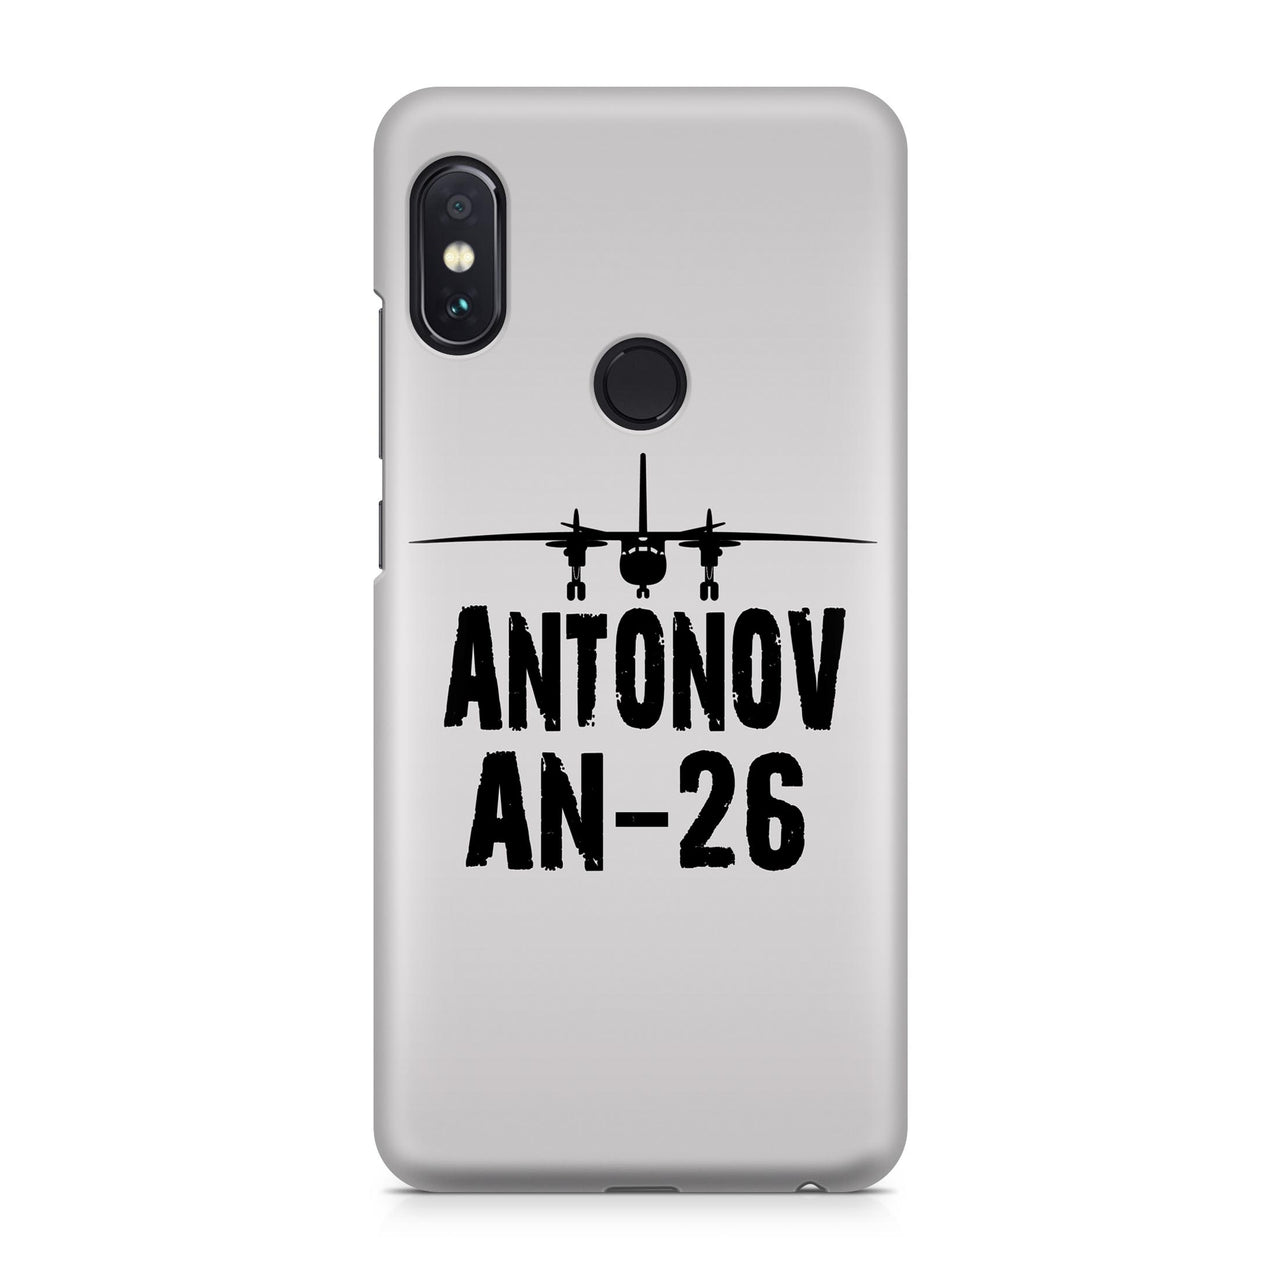 Antonov AN-26 Plane & Designed Xiaomi Cases